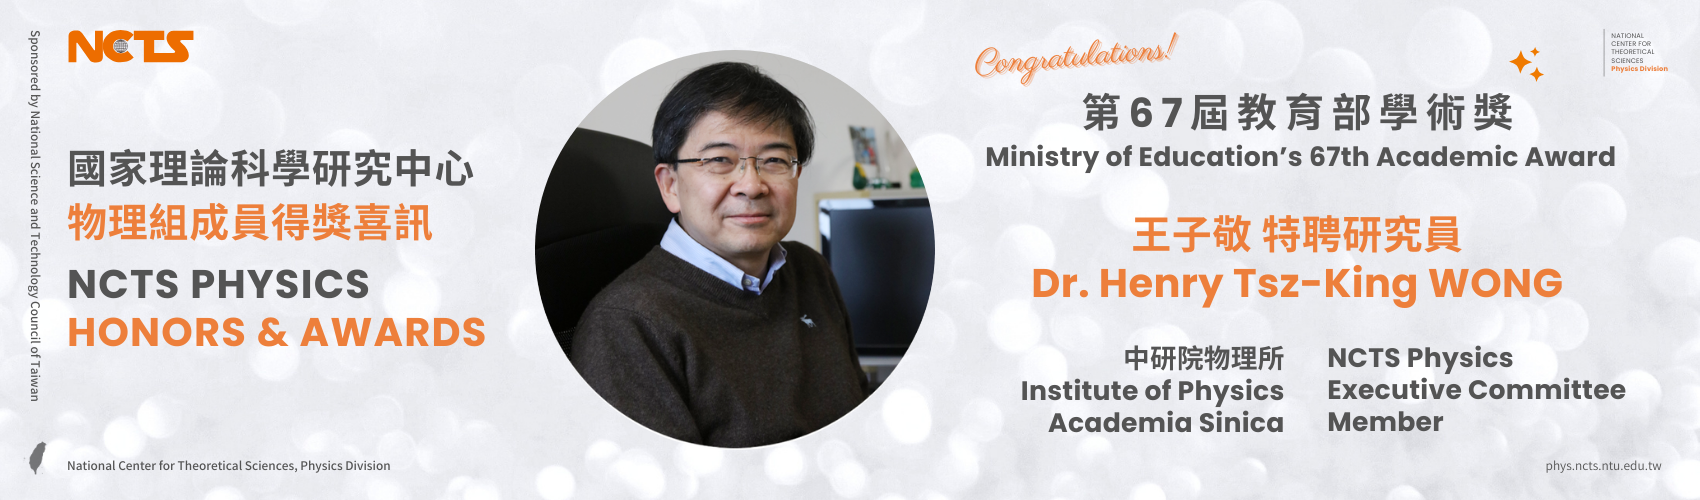 NCTS Congratulates Dr. Henry Tsz-King Wong on Winning MOE 67th Academic Award